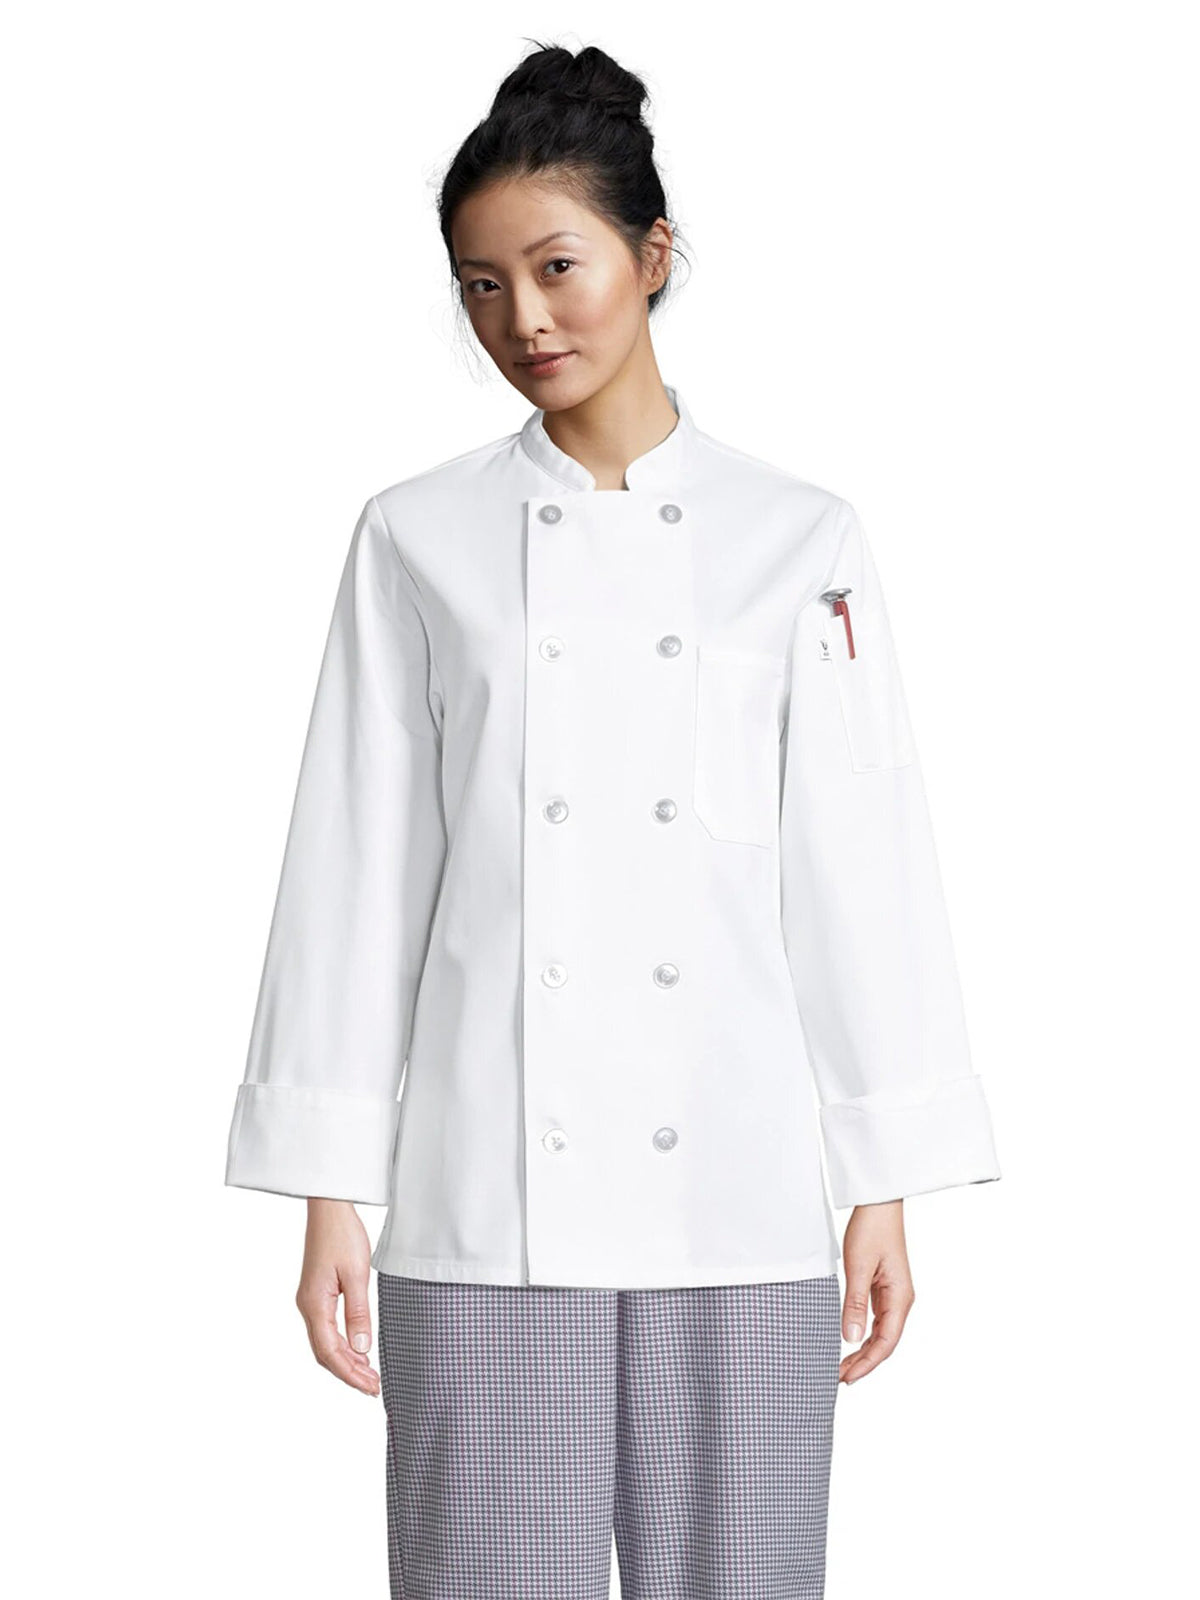 Women's Chef Coat - 0475 - White